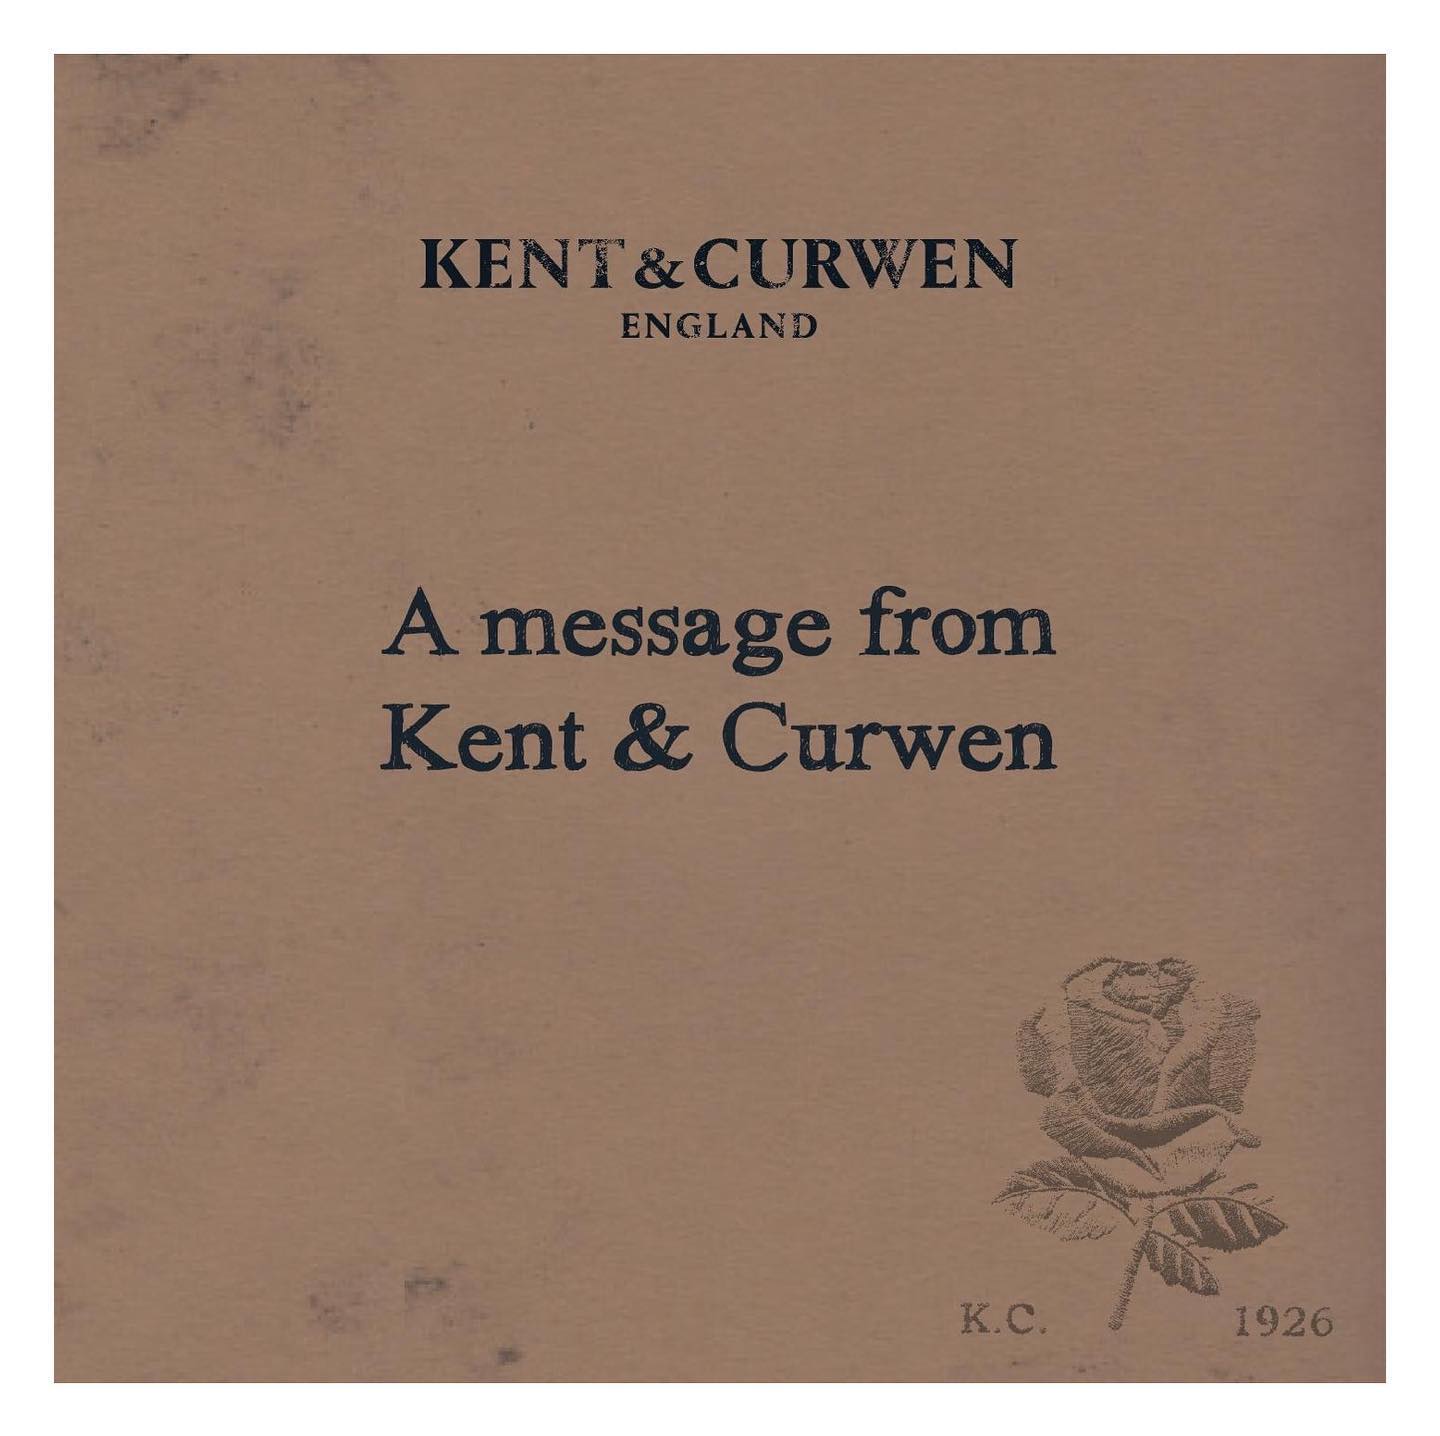 Dear Kent & Curwen Community,